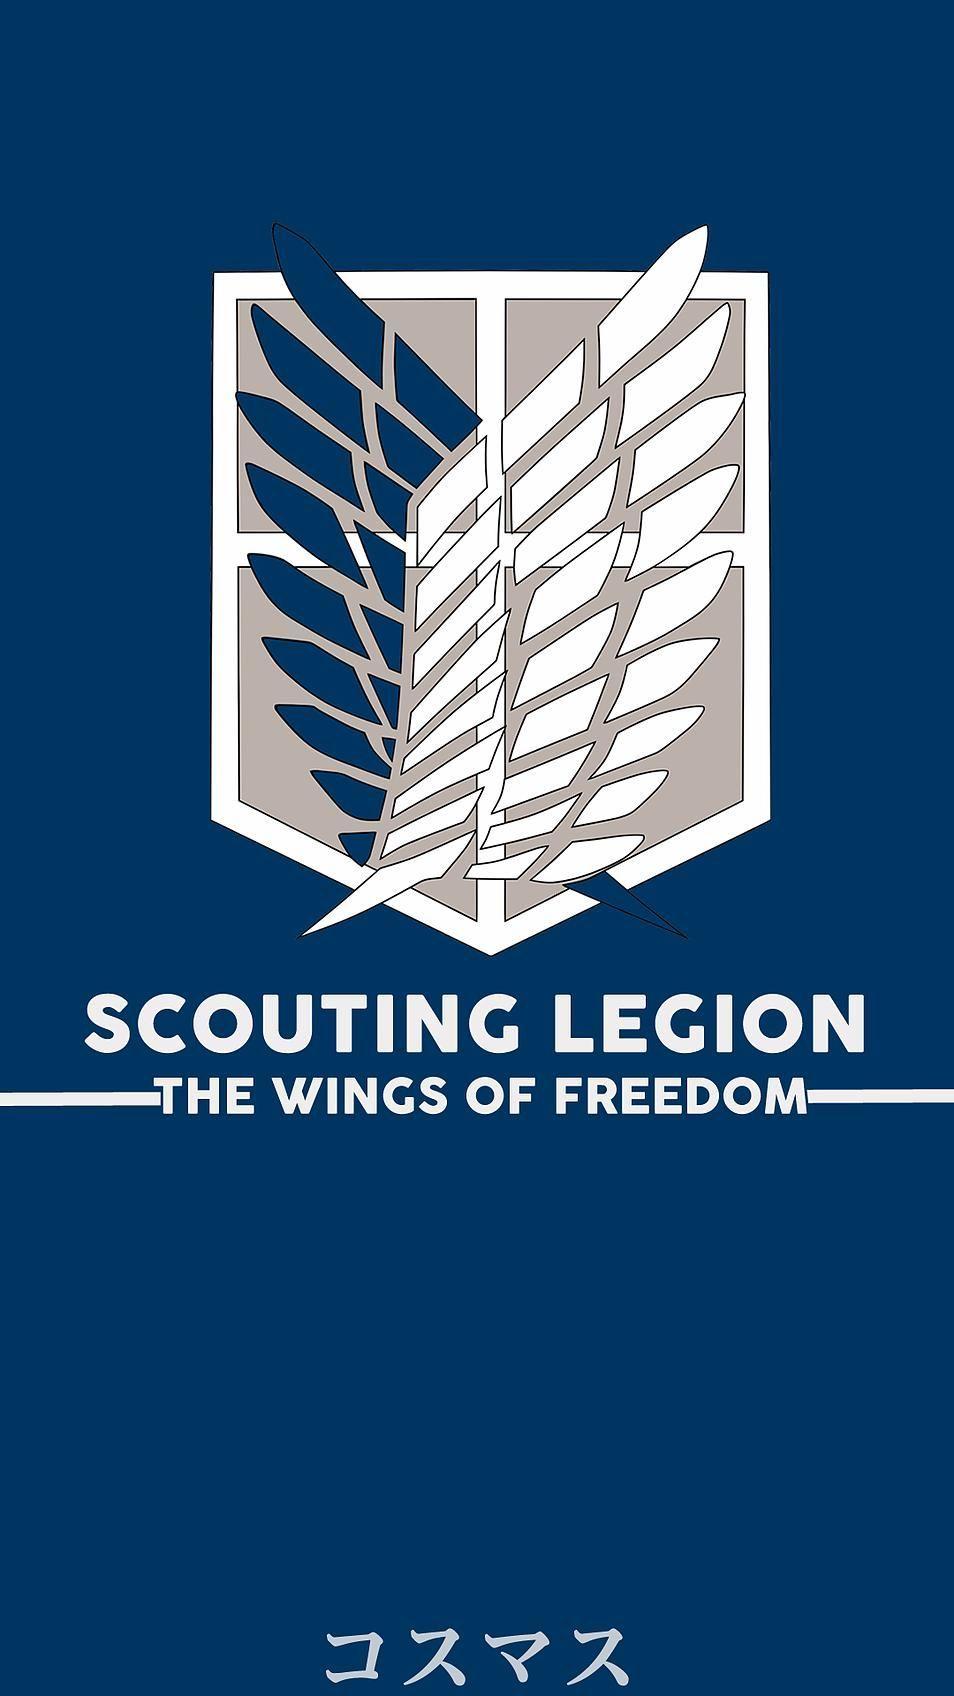 Scouting Legion Logo. Attack on titan .com